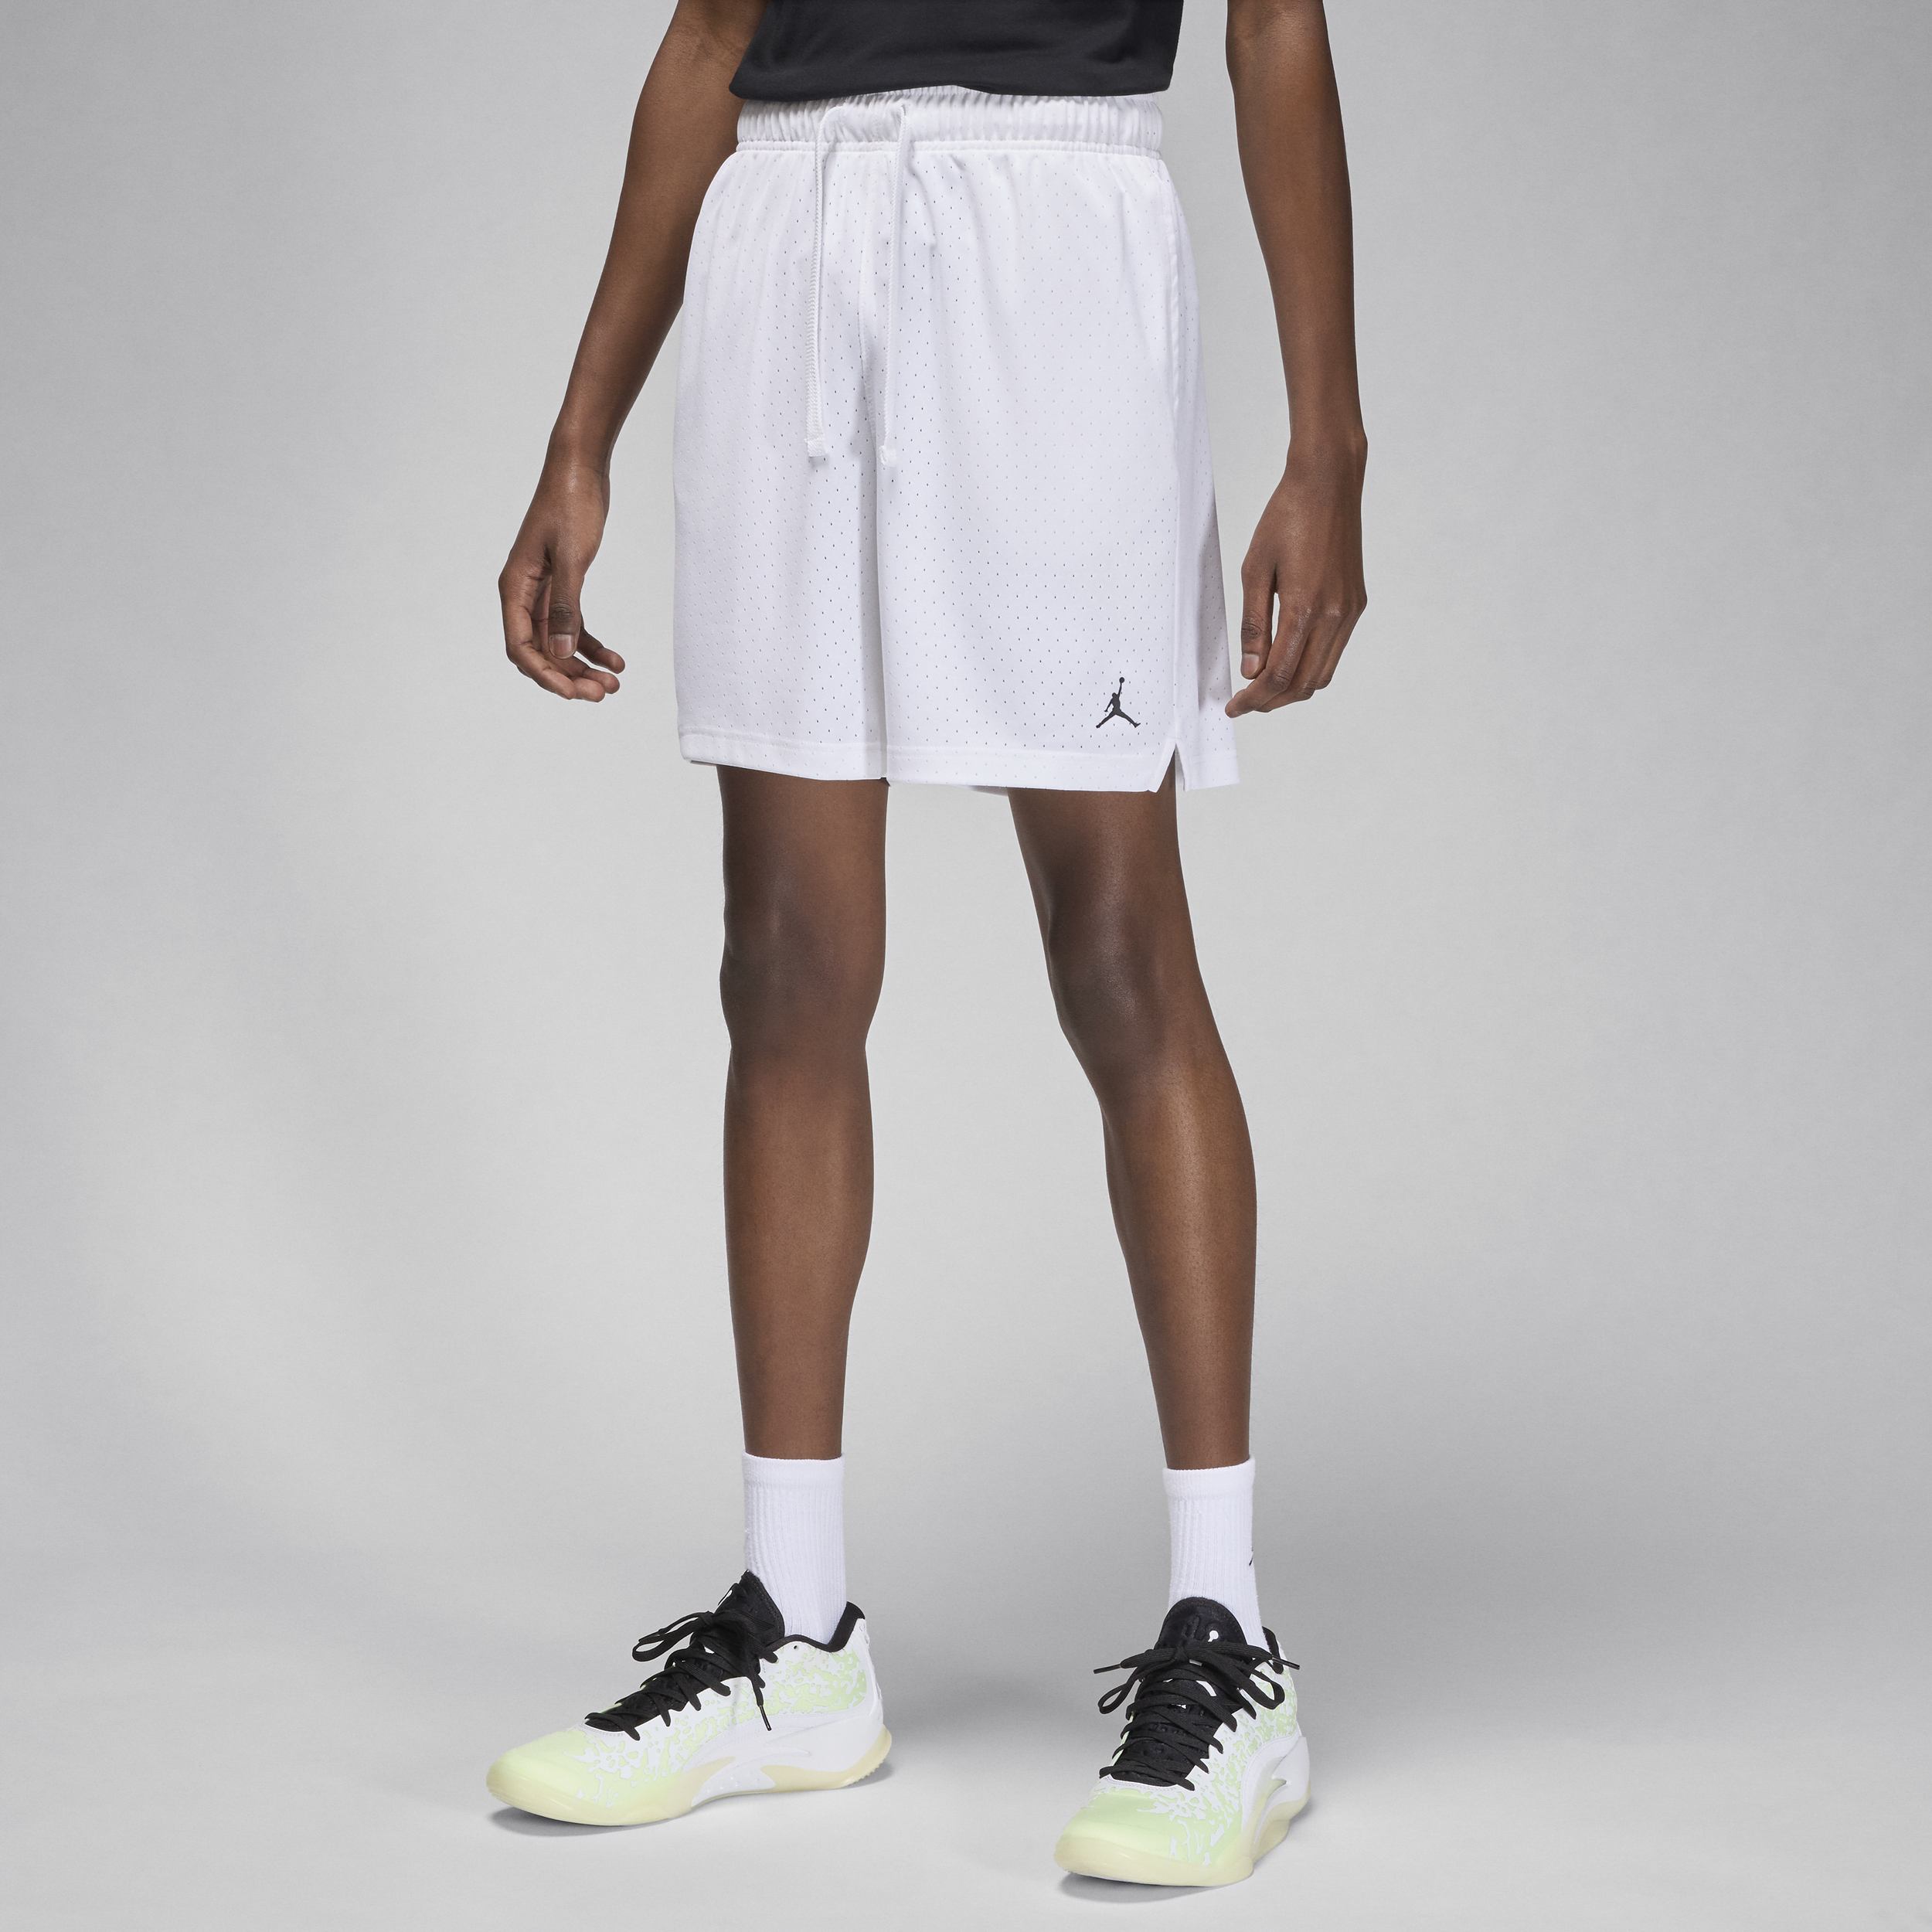 Nike Shorts in mesh Dri-FIT Jordan Sport – Uomo - Bianco